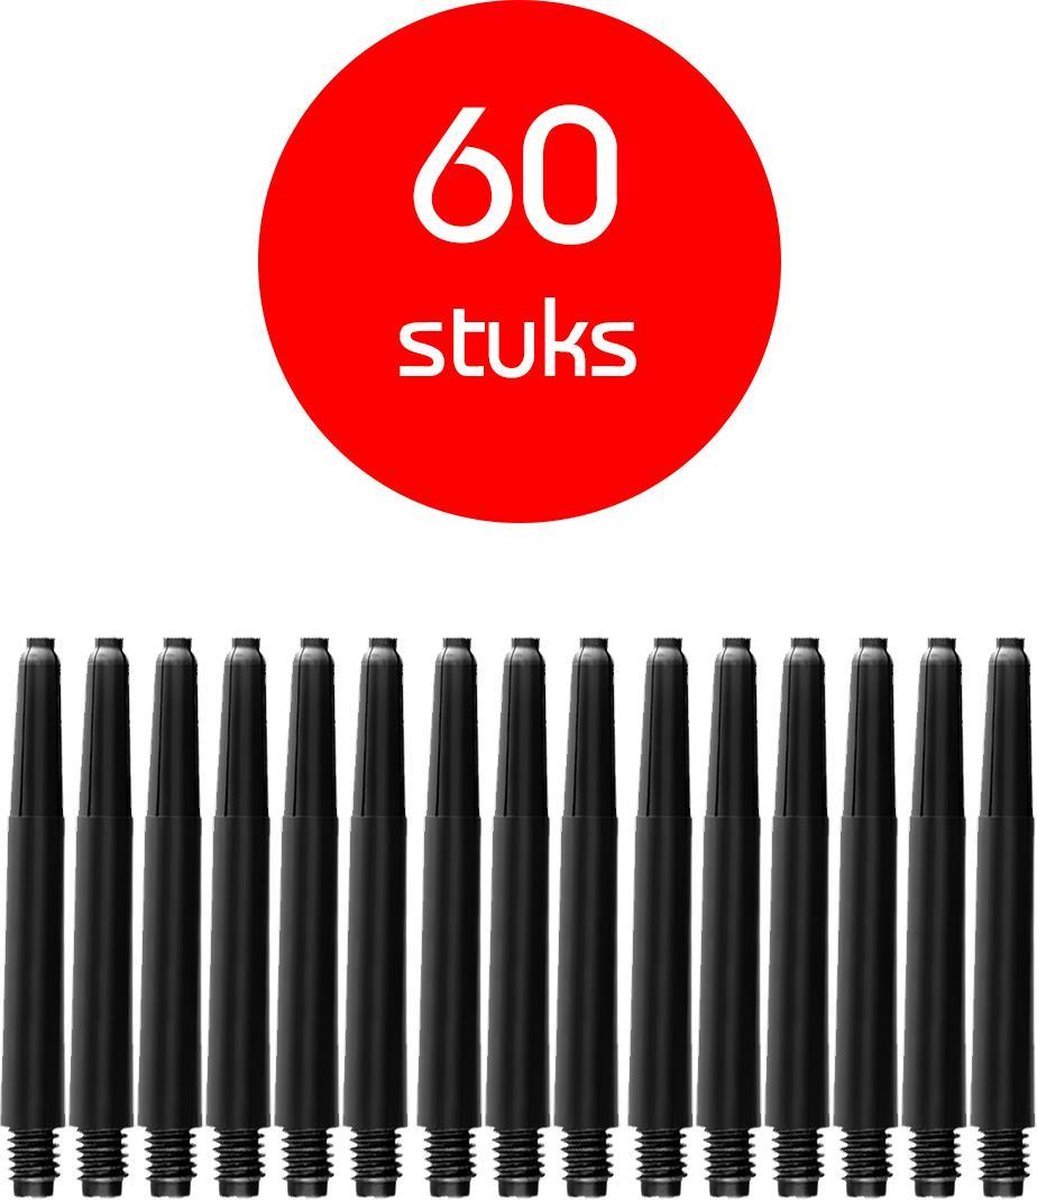 Darts Set - dart shafts - 20 sets (60 stuks) - Inbetween - zwart - darts shafts